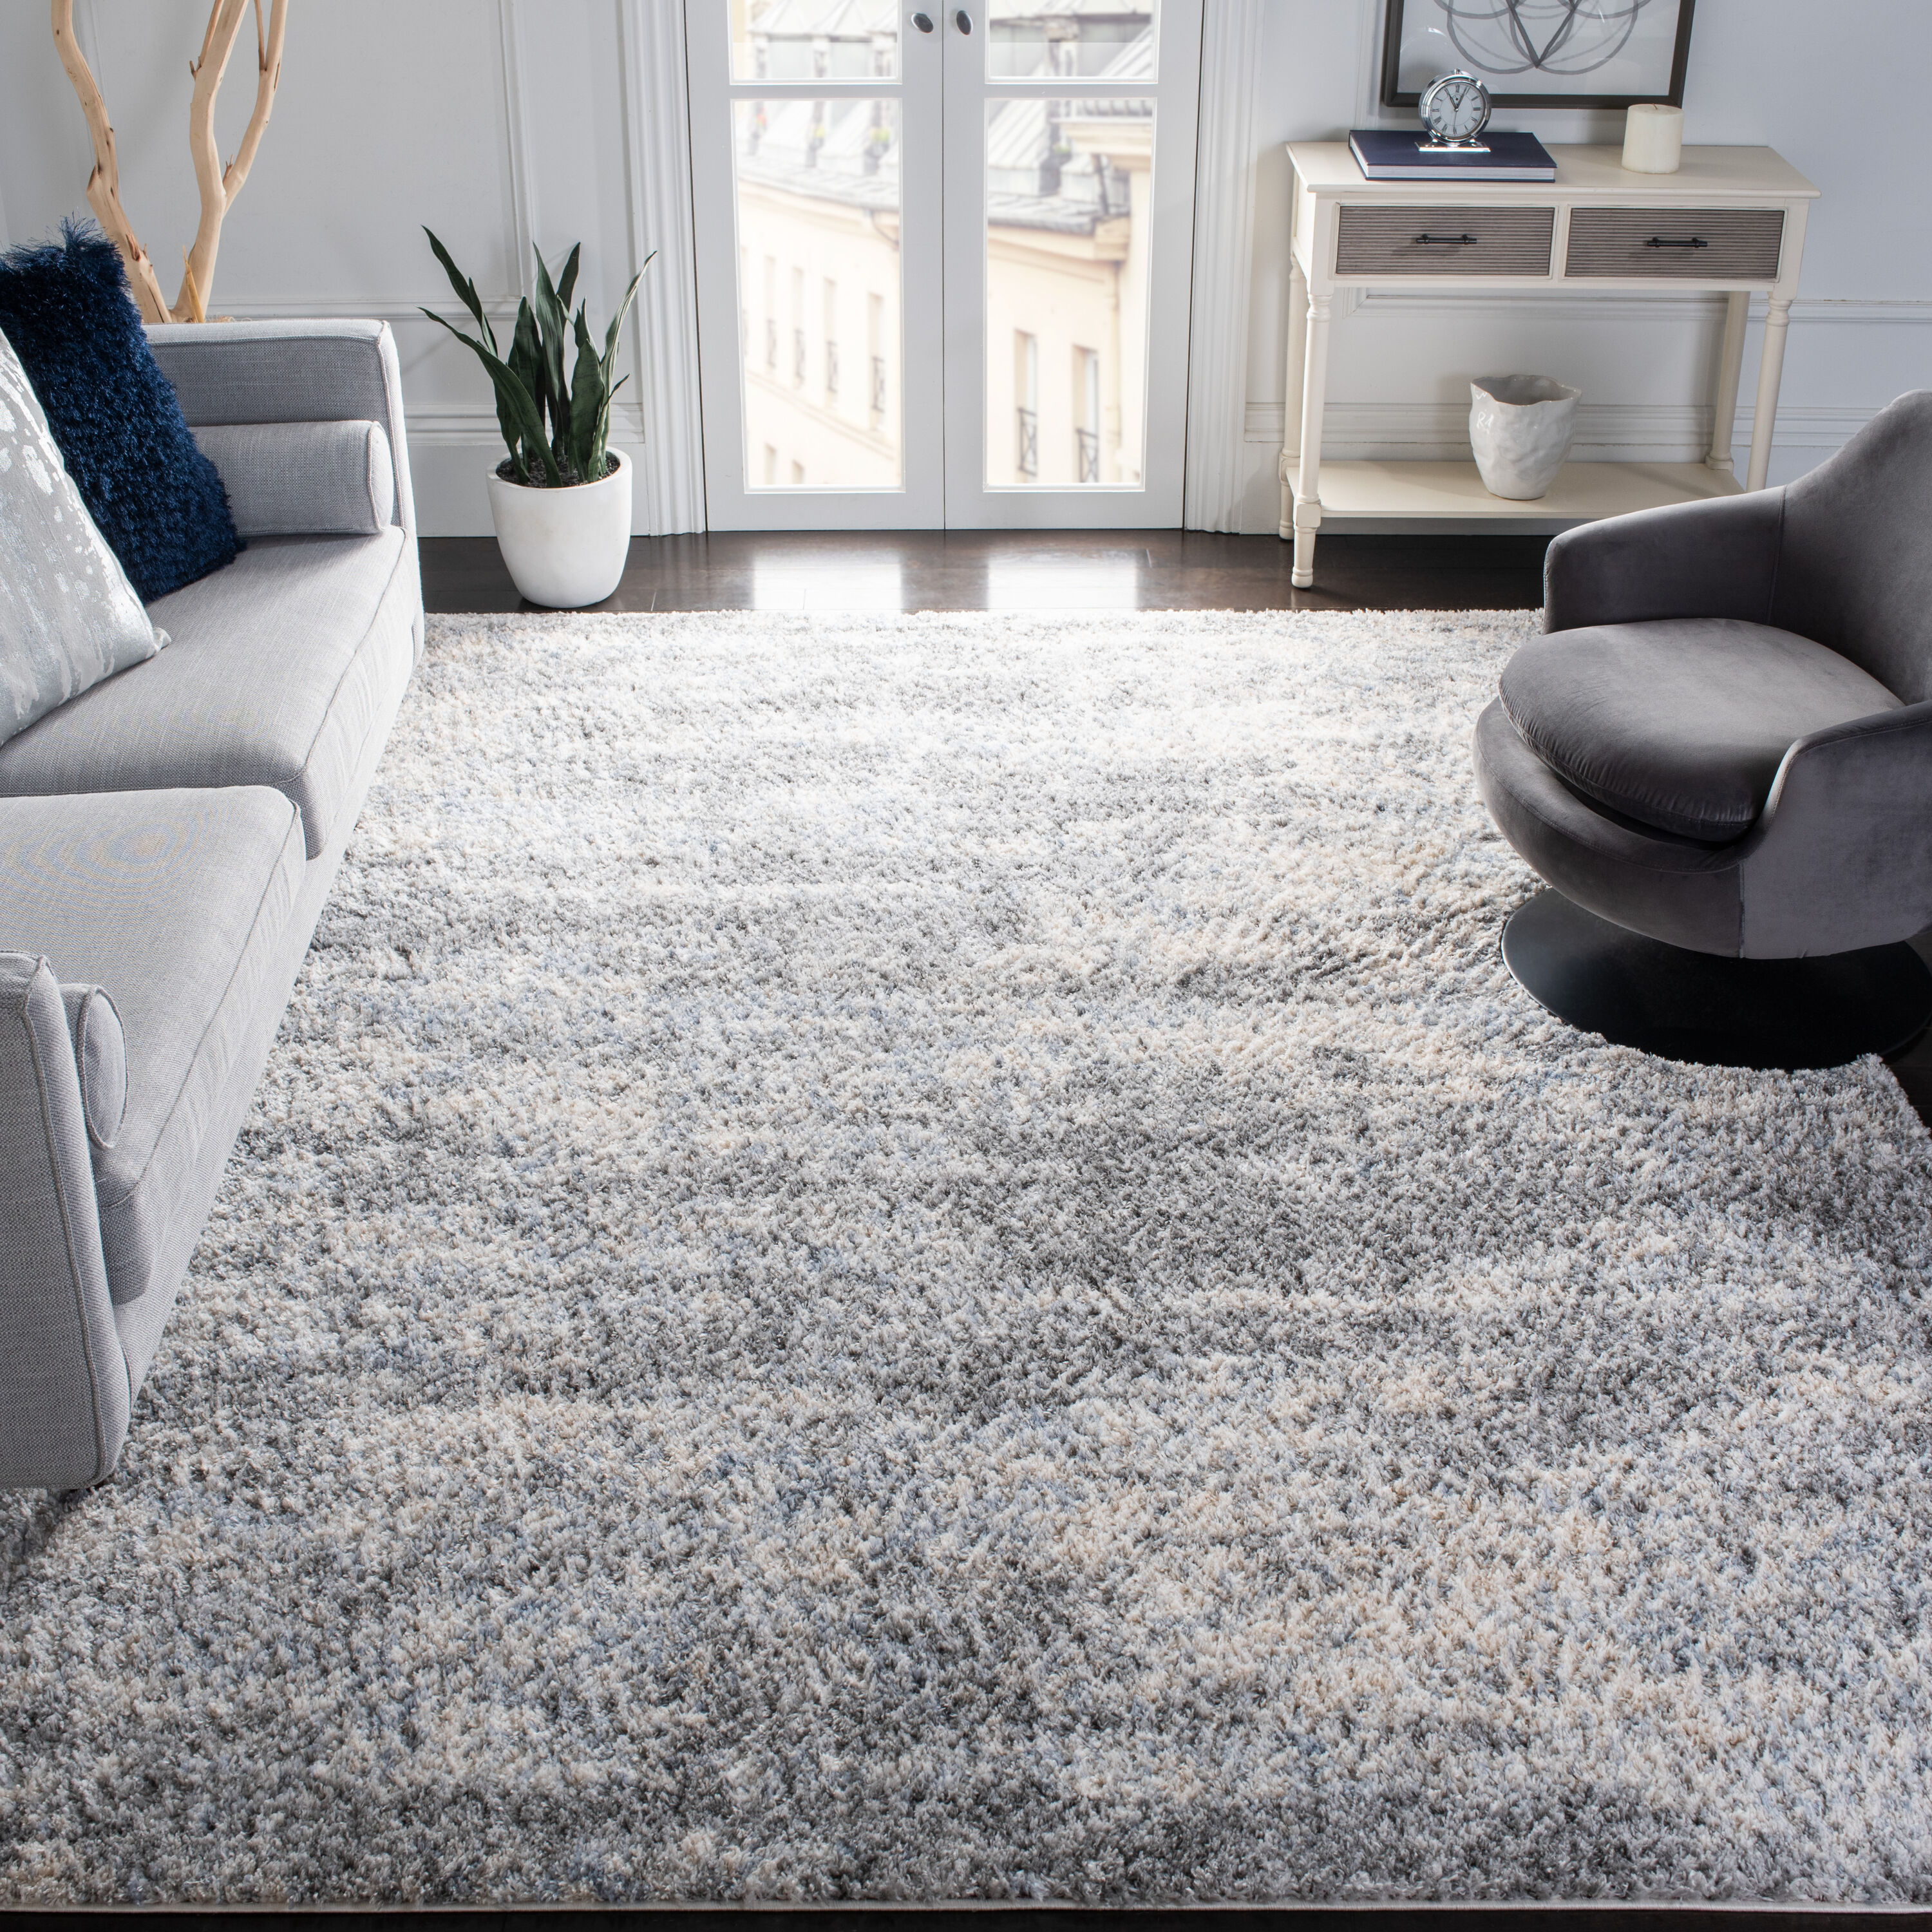 Image of Short gray shag carpet